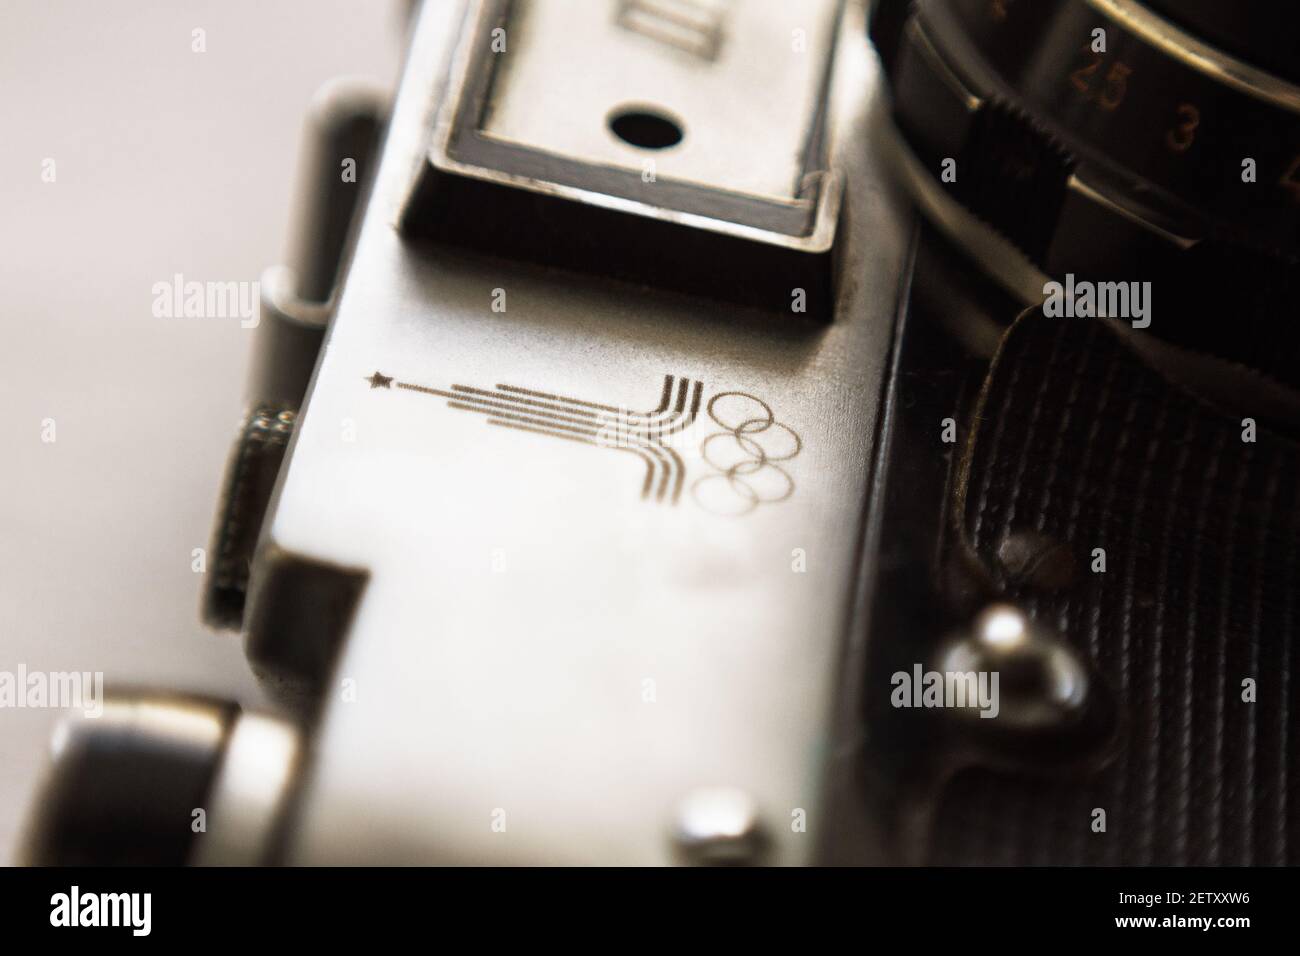 Retro photo camera FED 5v, Soviet rangefinder camera with emblem of XXII Olympic Games. Illustrative editorial: Ufa, Russia - January 31, 2014 Stock Photo